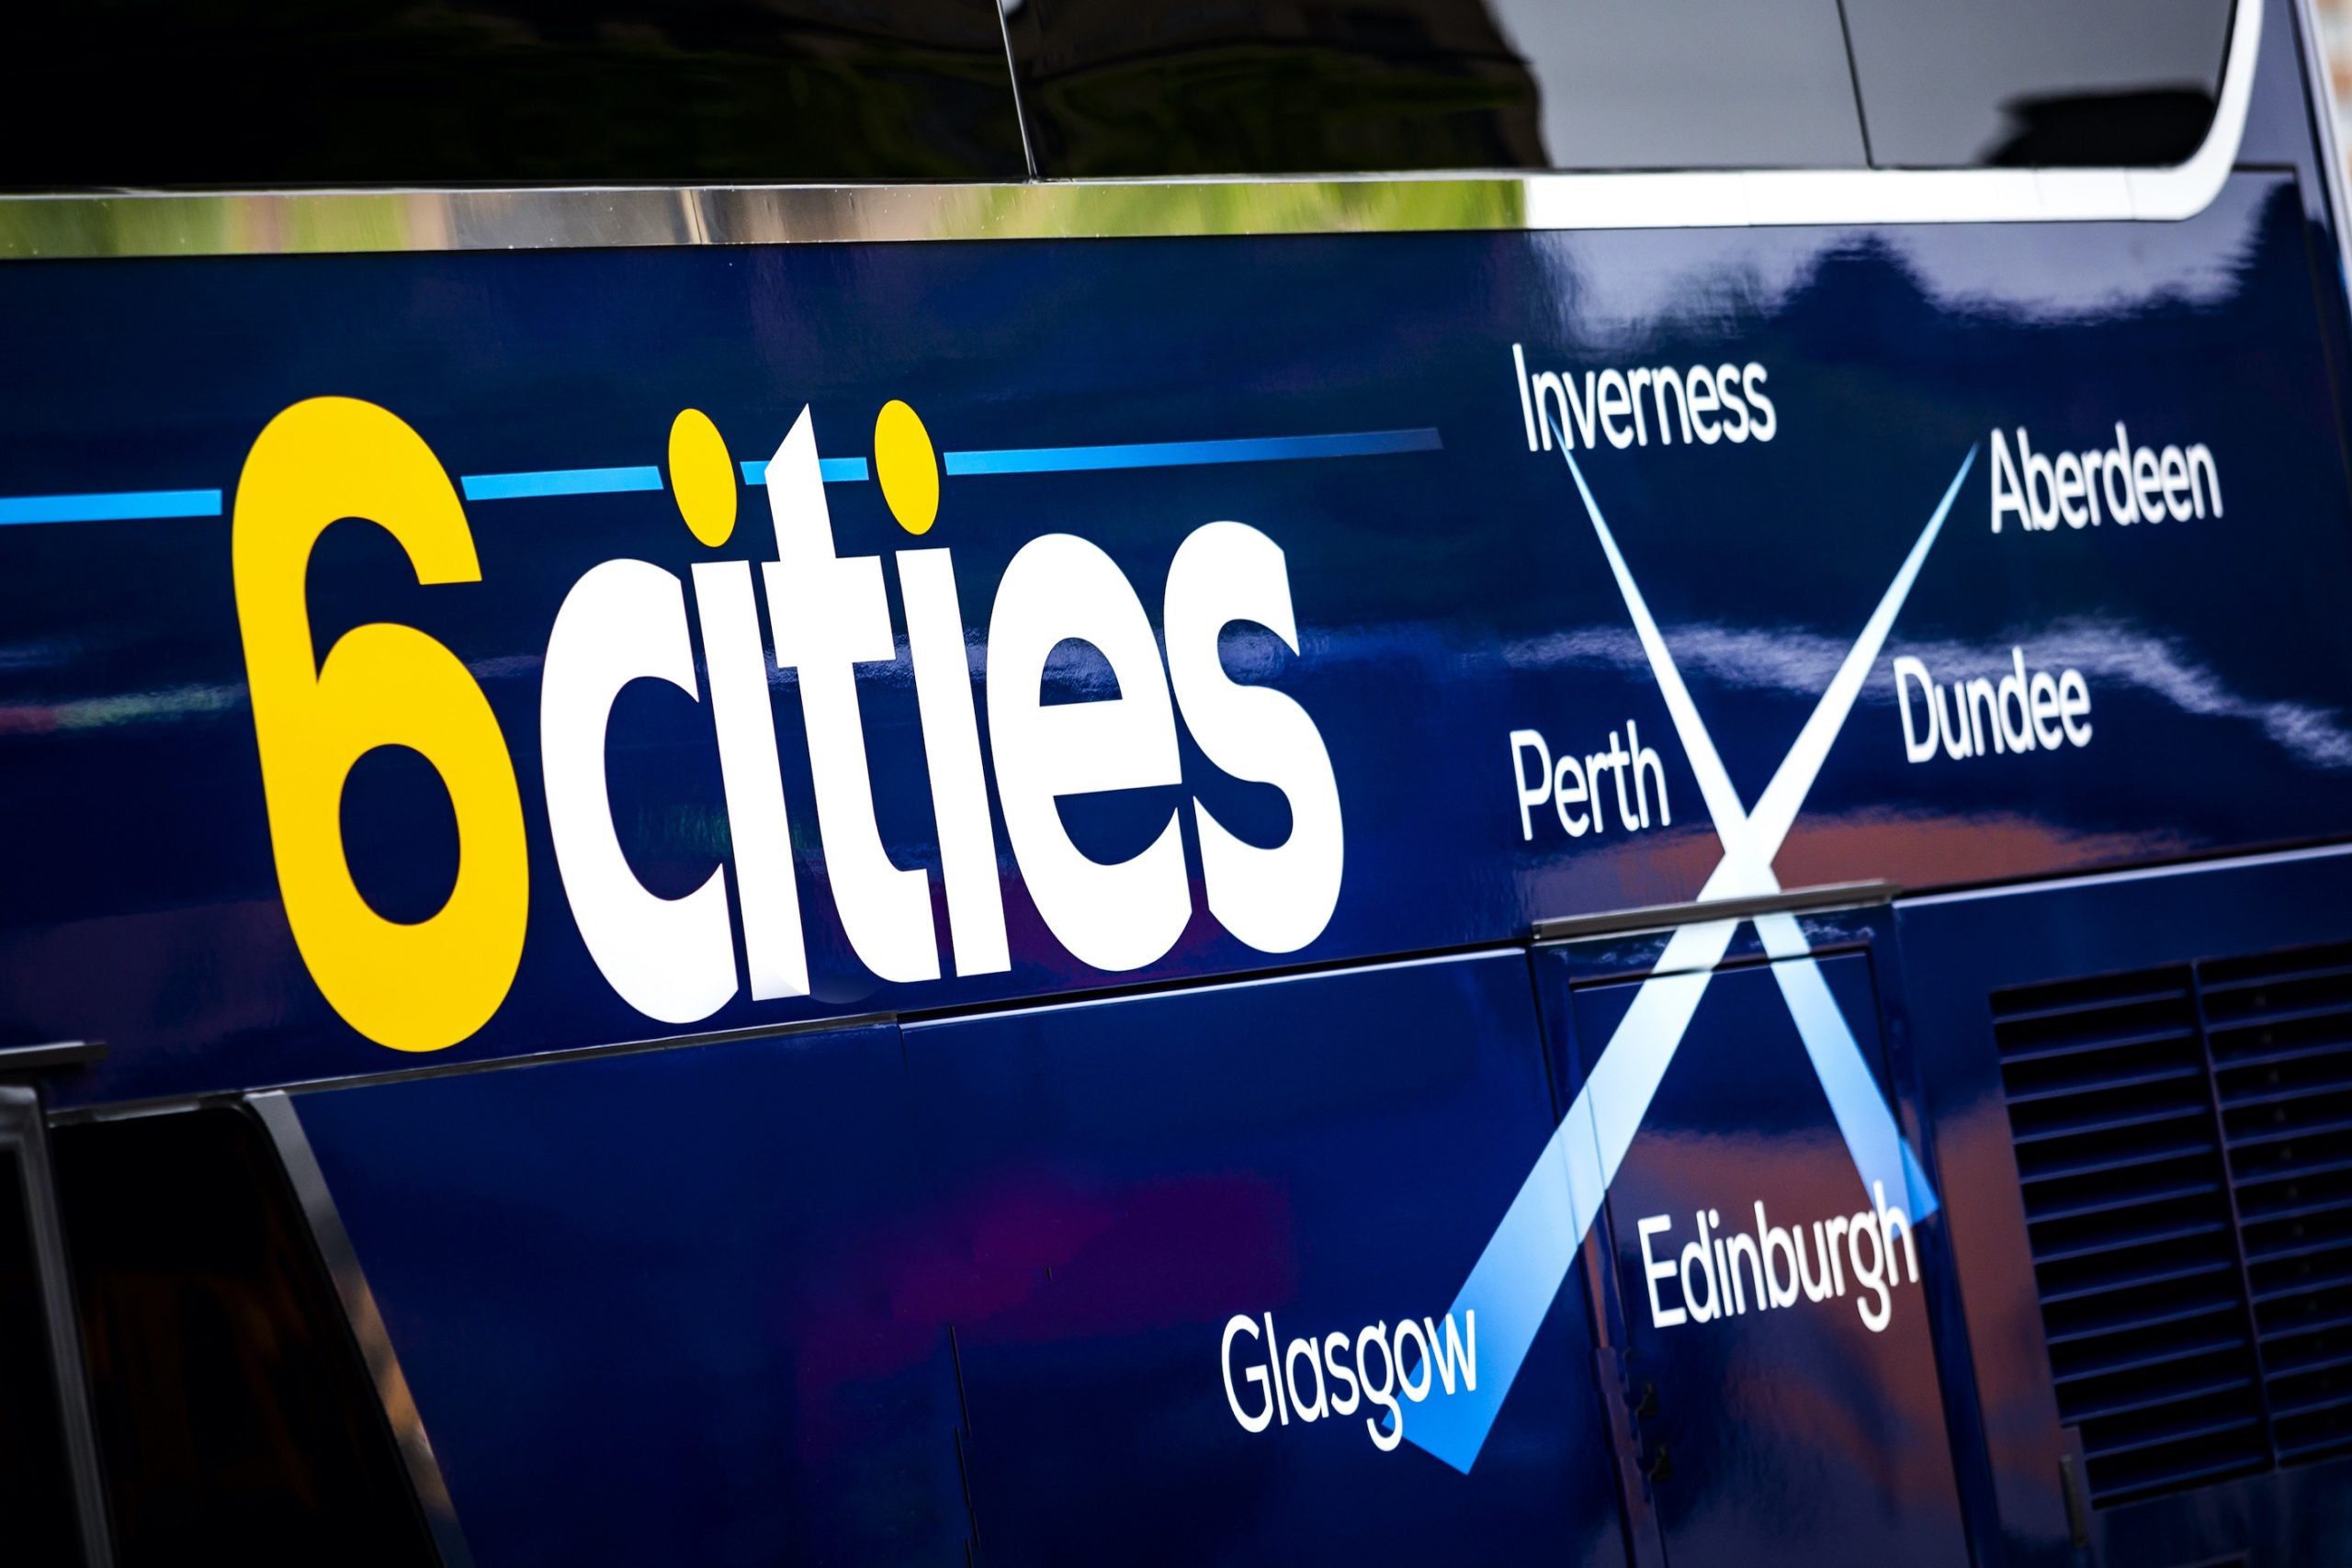 Scottish Citylink improves timetables